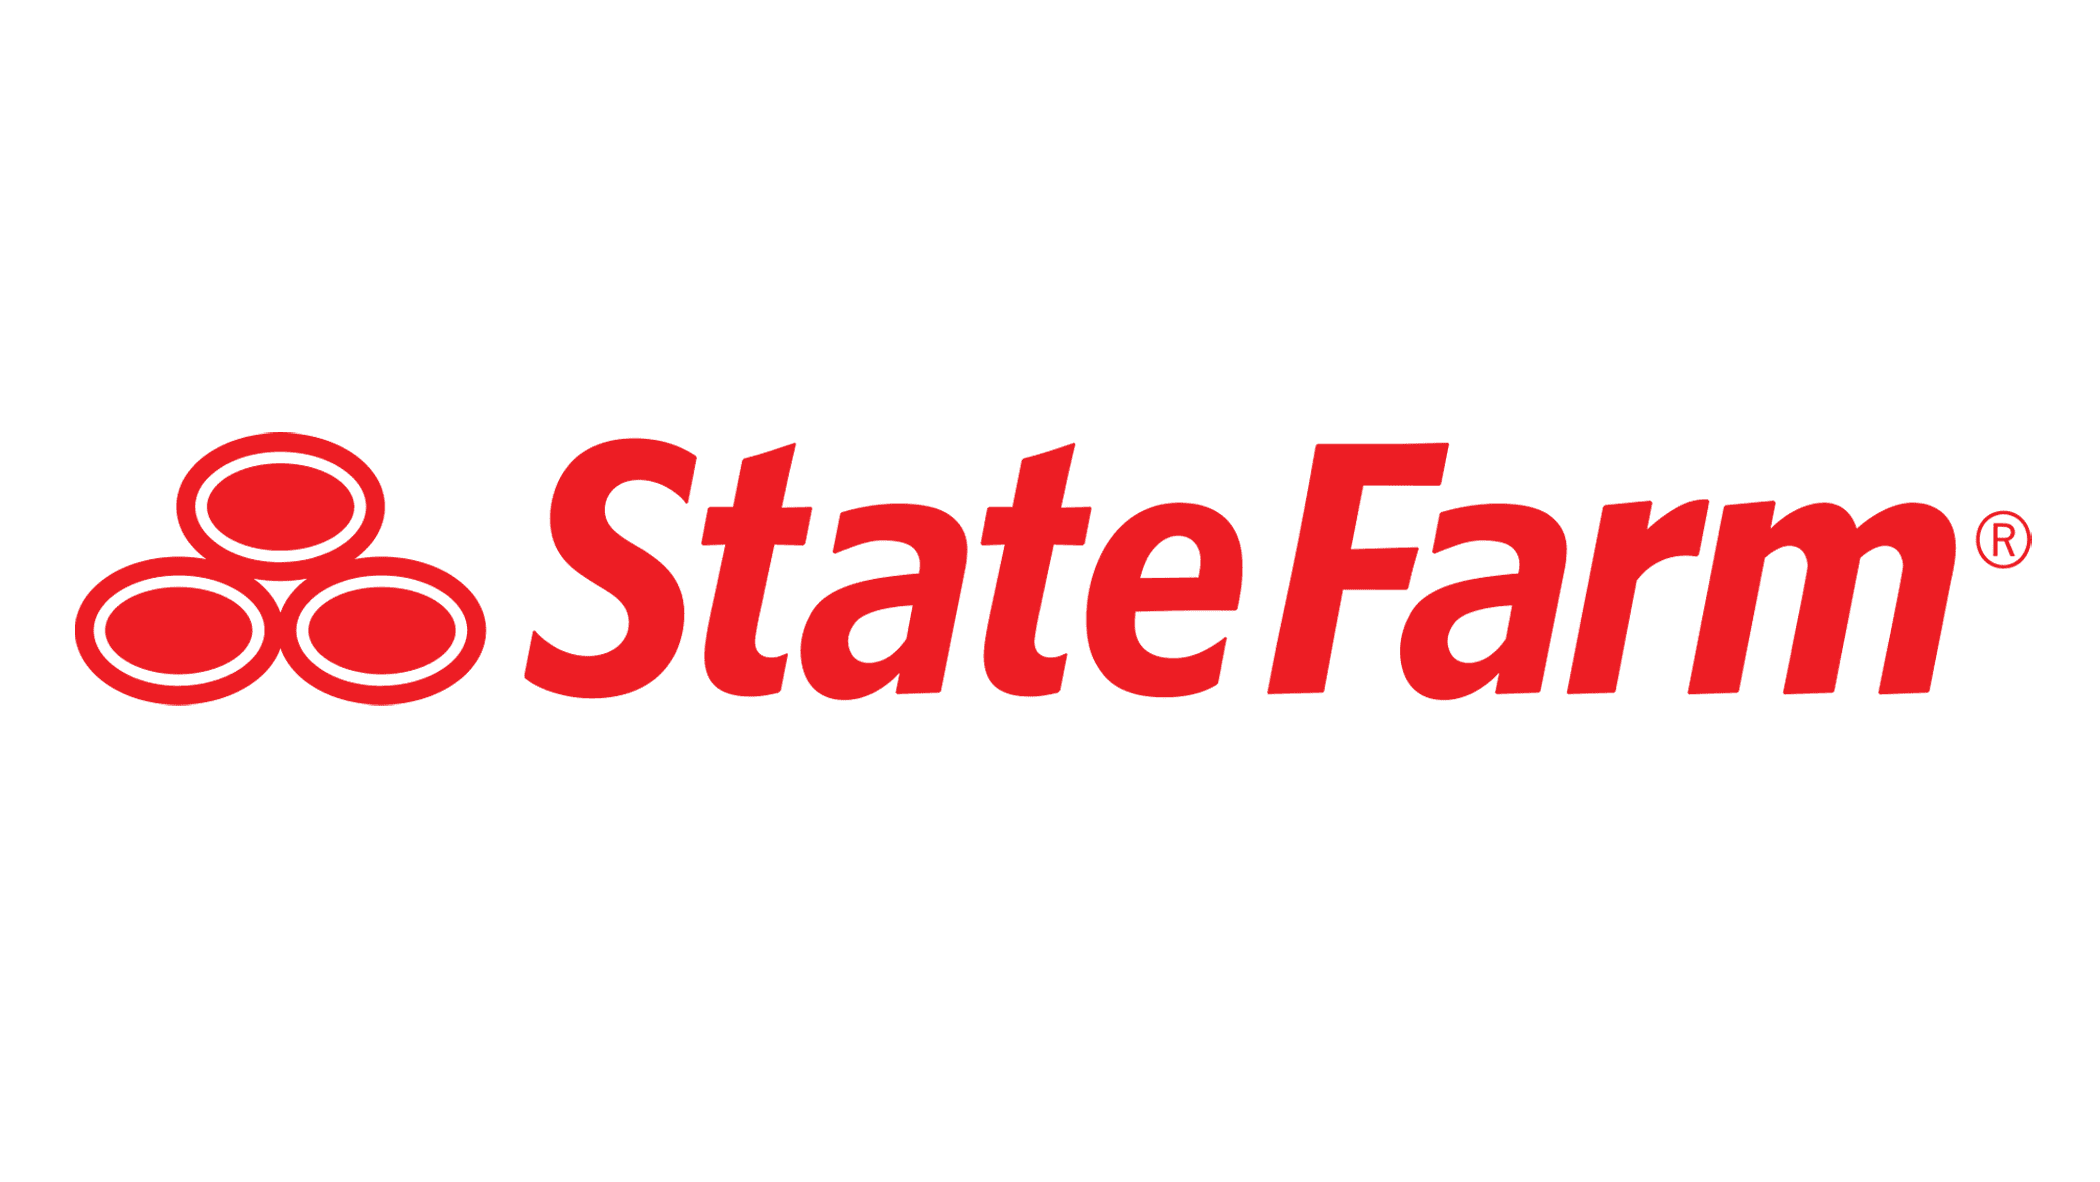 The State Farm logo